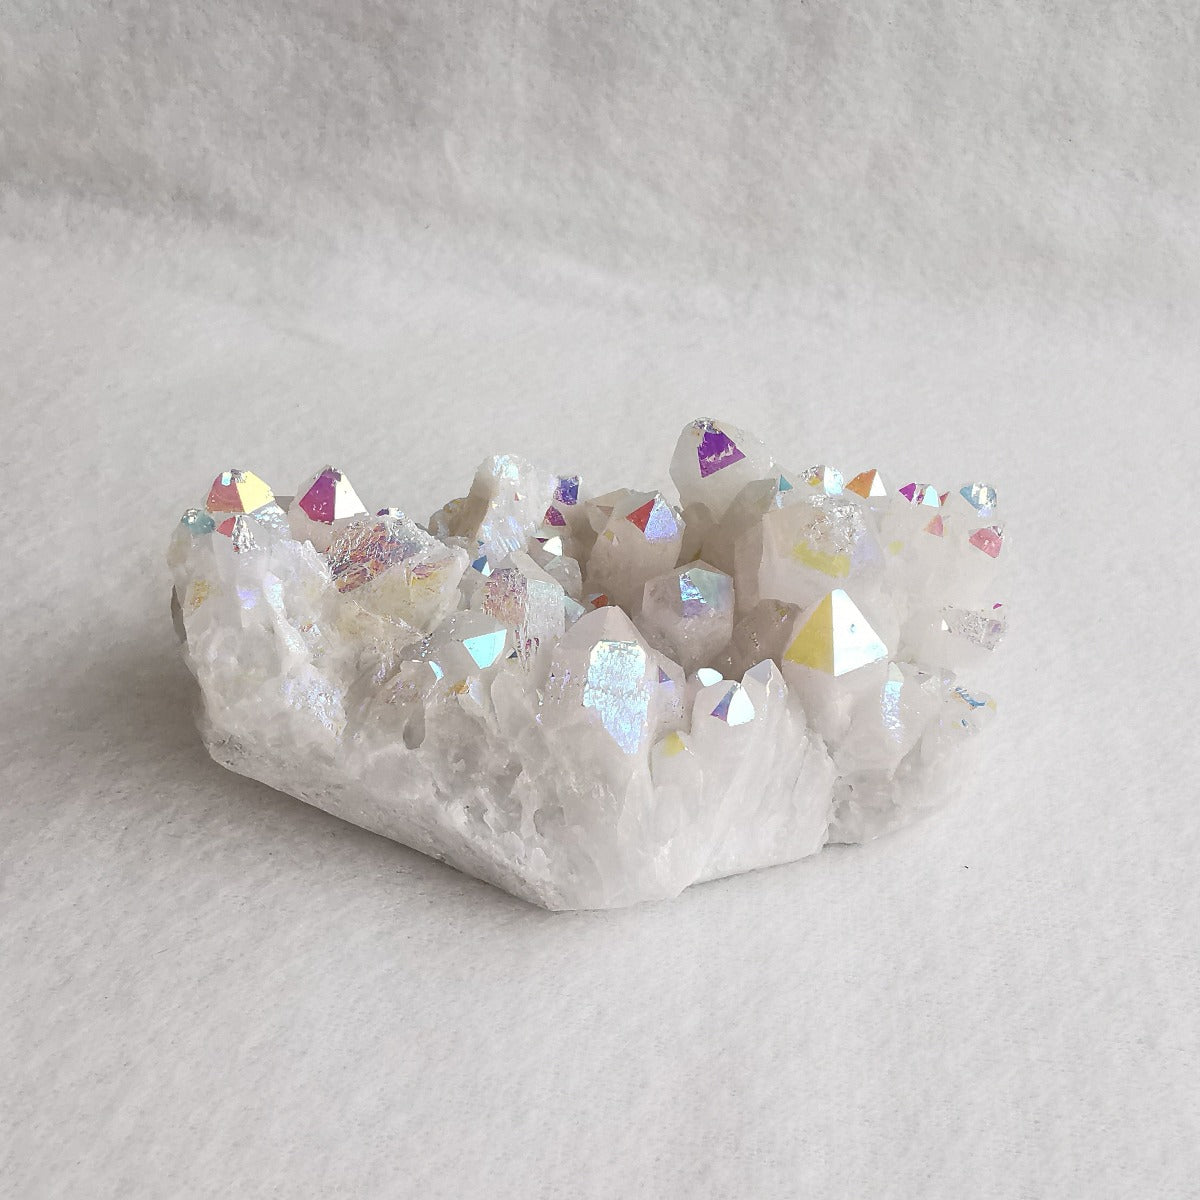 Engel aura bergkrystall krystallgruppe 276 gram